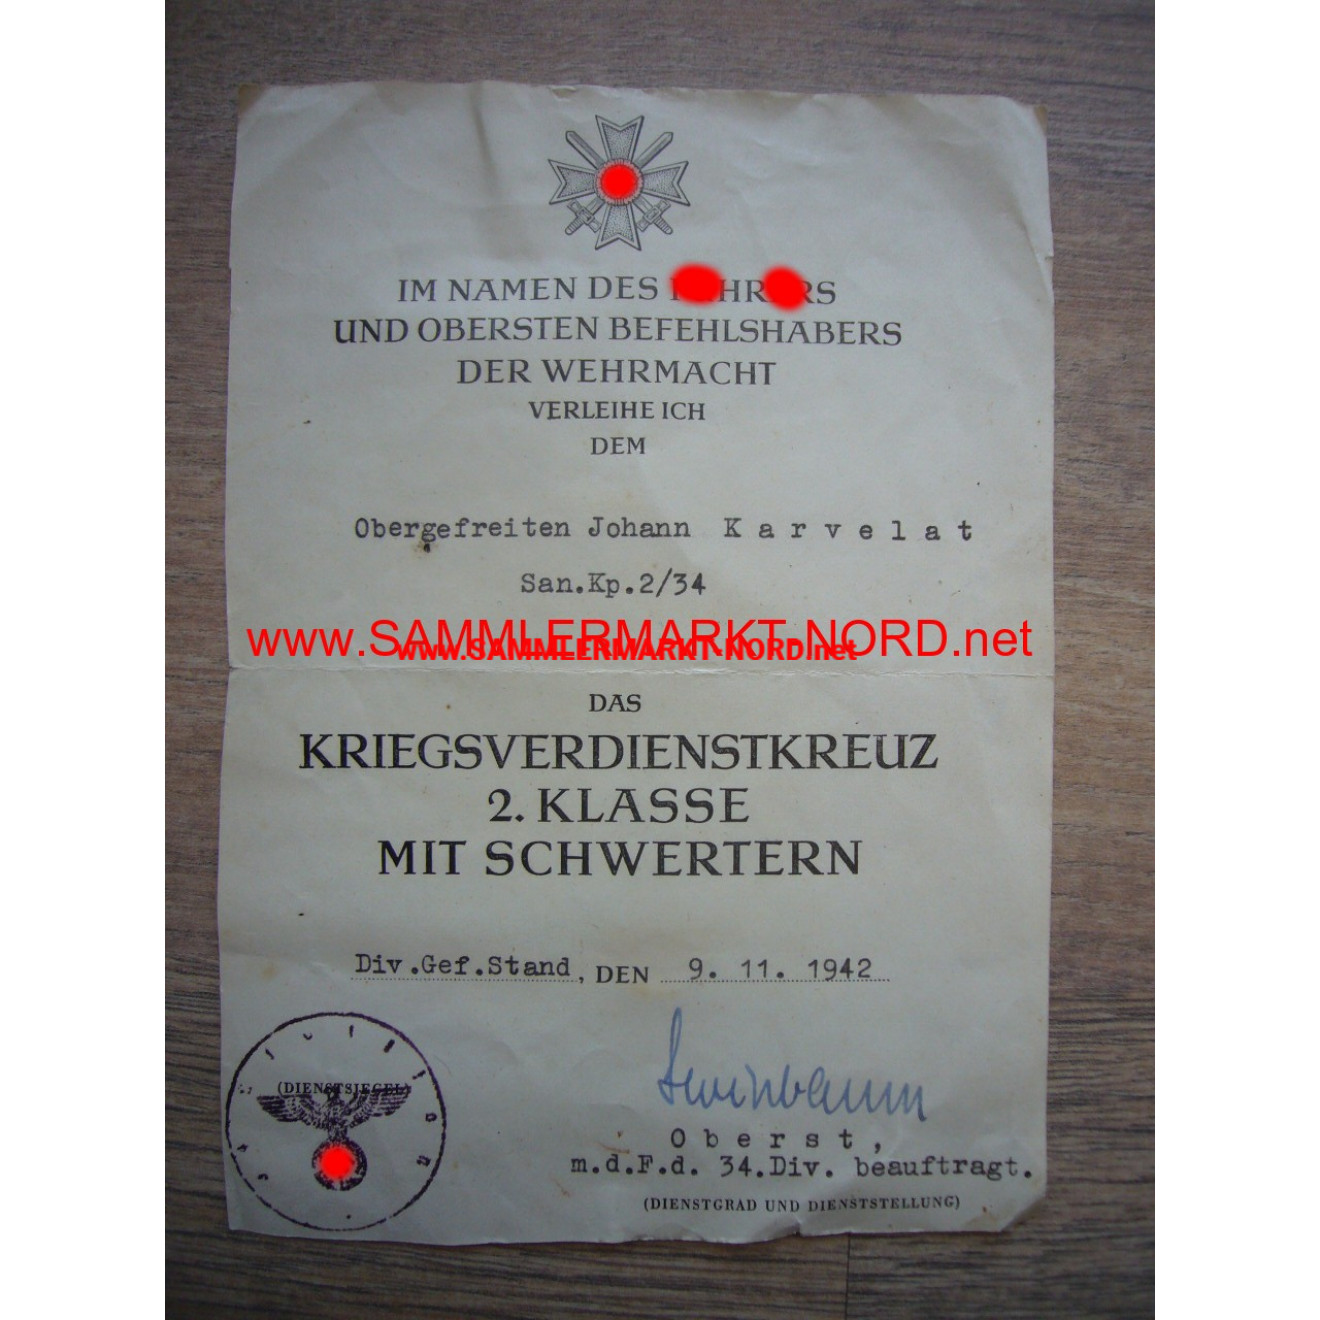 KVK certificate - Colonel FRIEDRICH HOCHBAUM - autograph